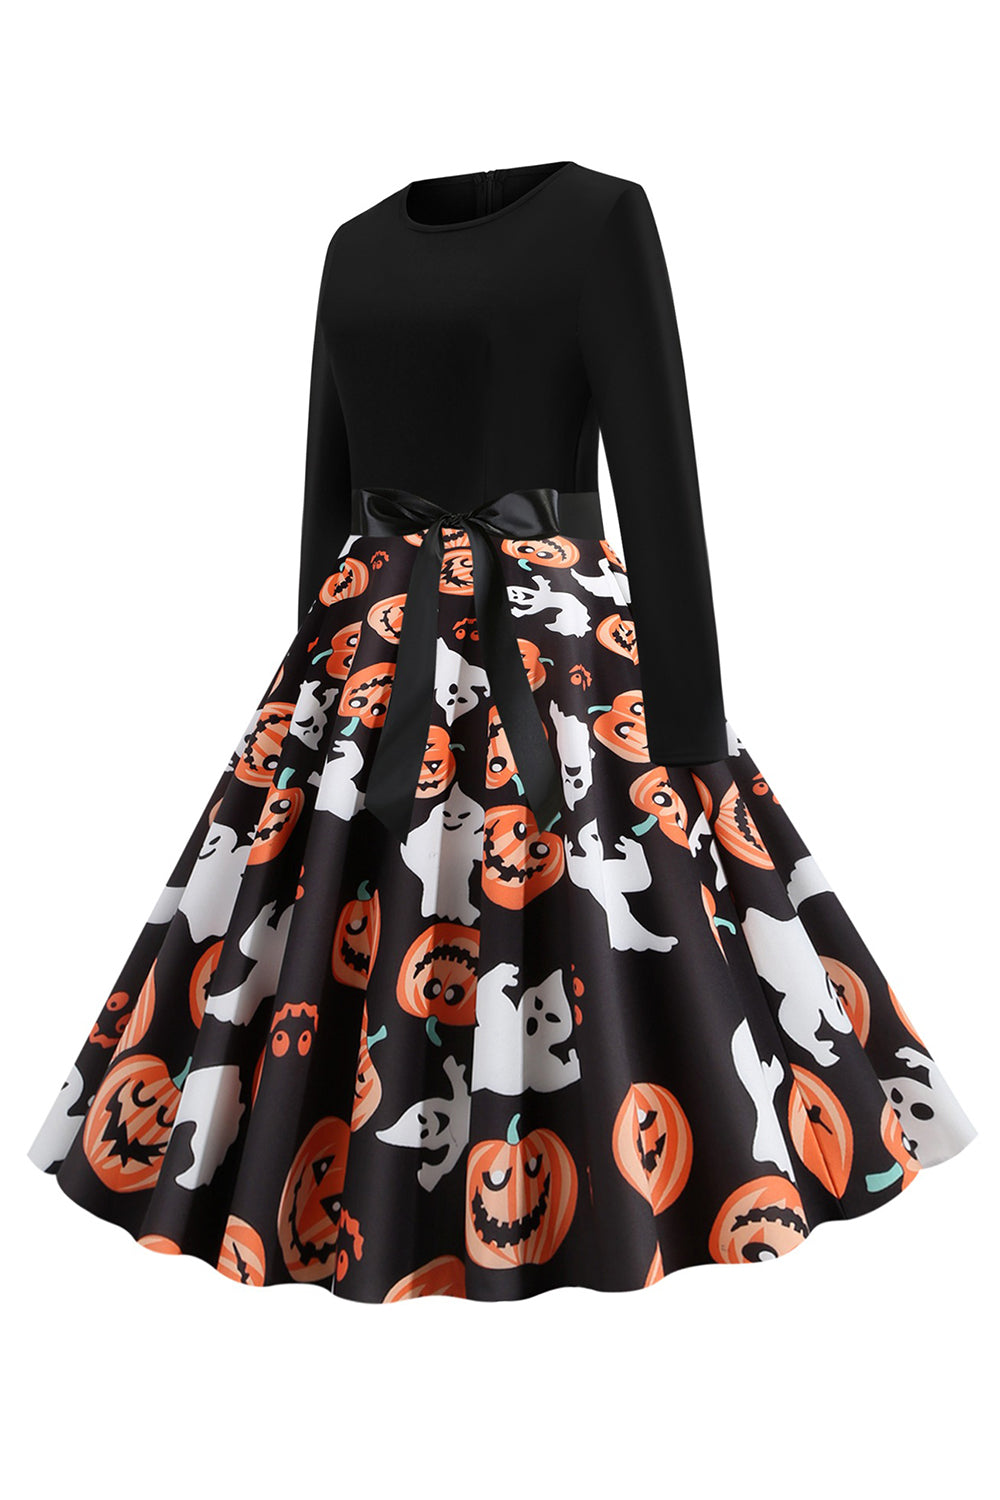 Black Pumpkin Lantern Printed Halloween Dress